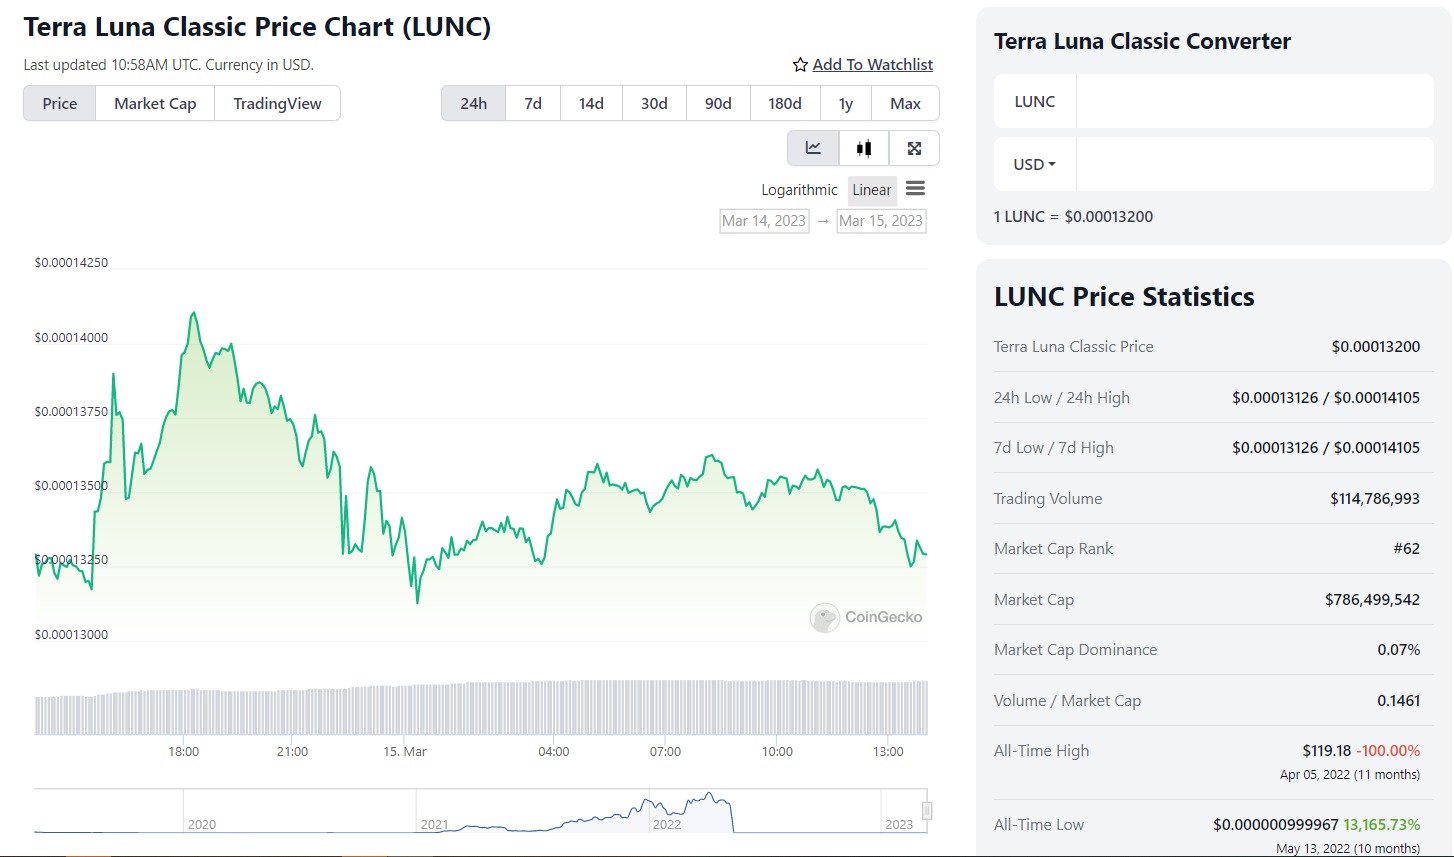 Lunc Price according to CoinGecko on  3/15/2023